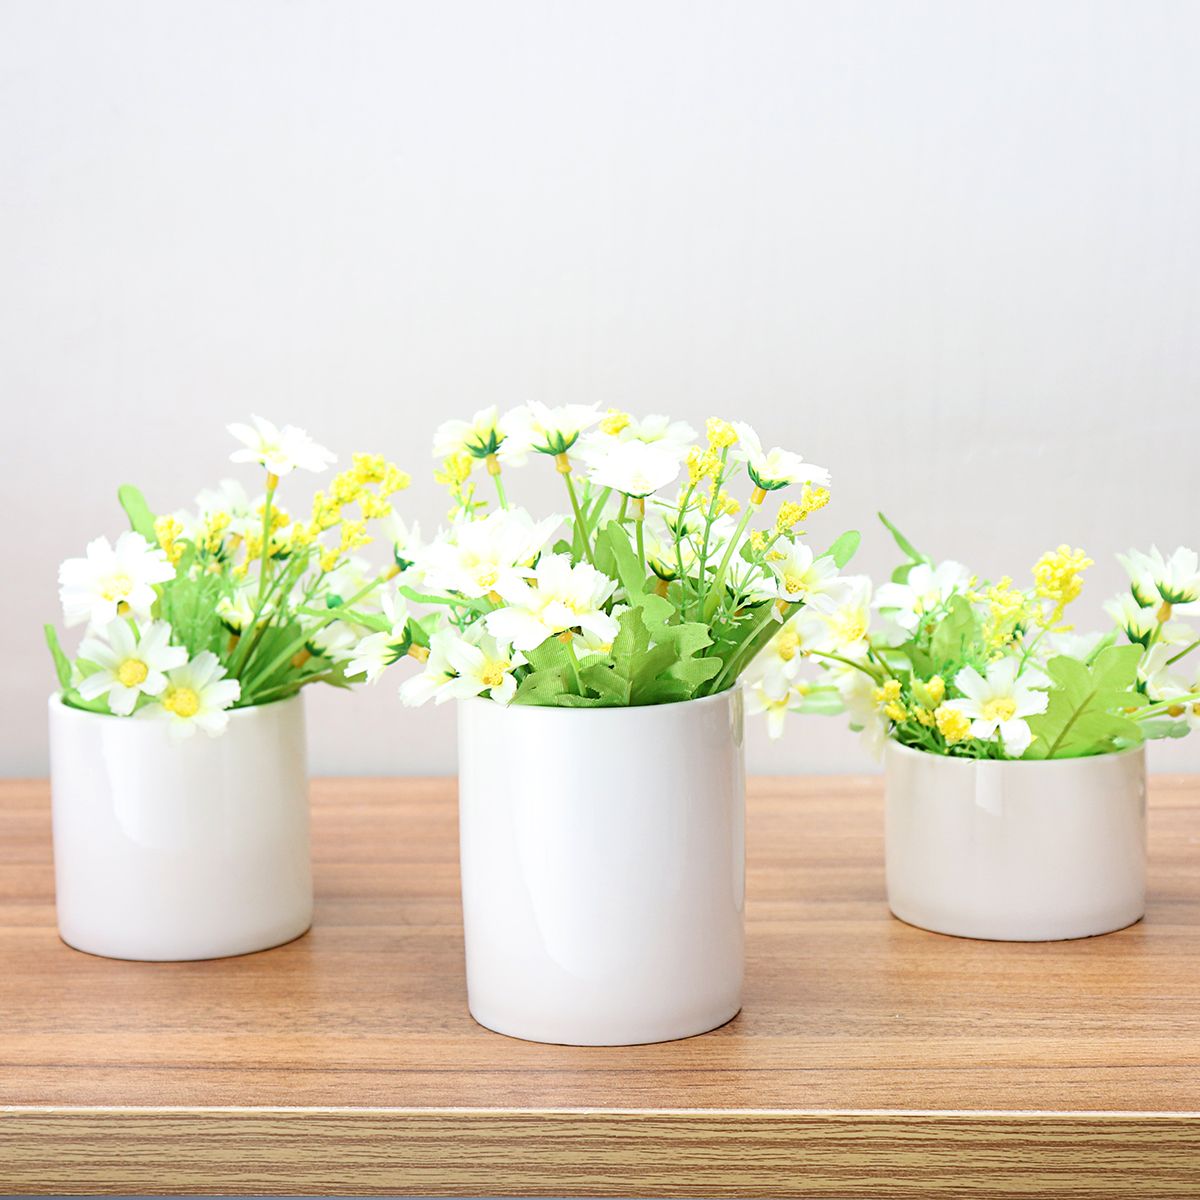 Ceramic-Flower-Plant-Succulent-Pot-Indoor-Rack-Garden-Display-Stand-Planter-Holder-Decor-1332925